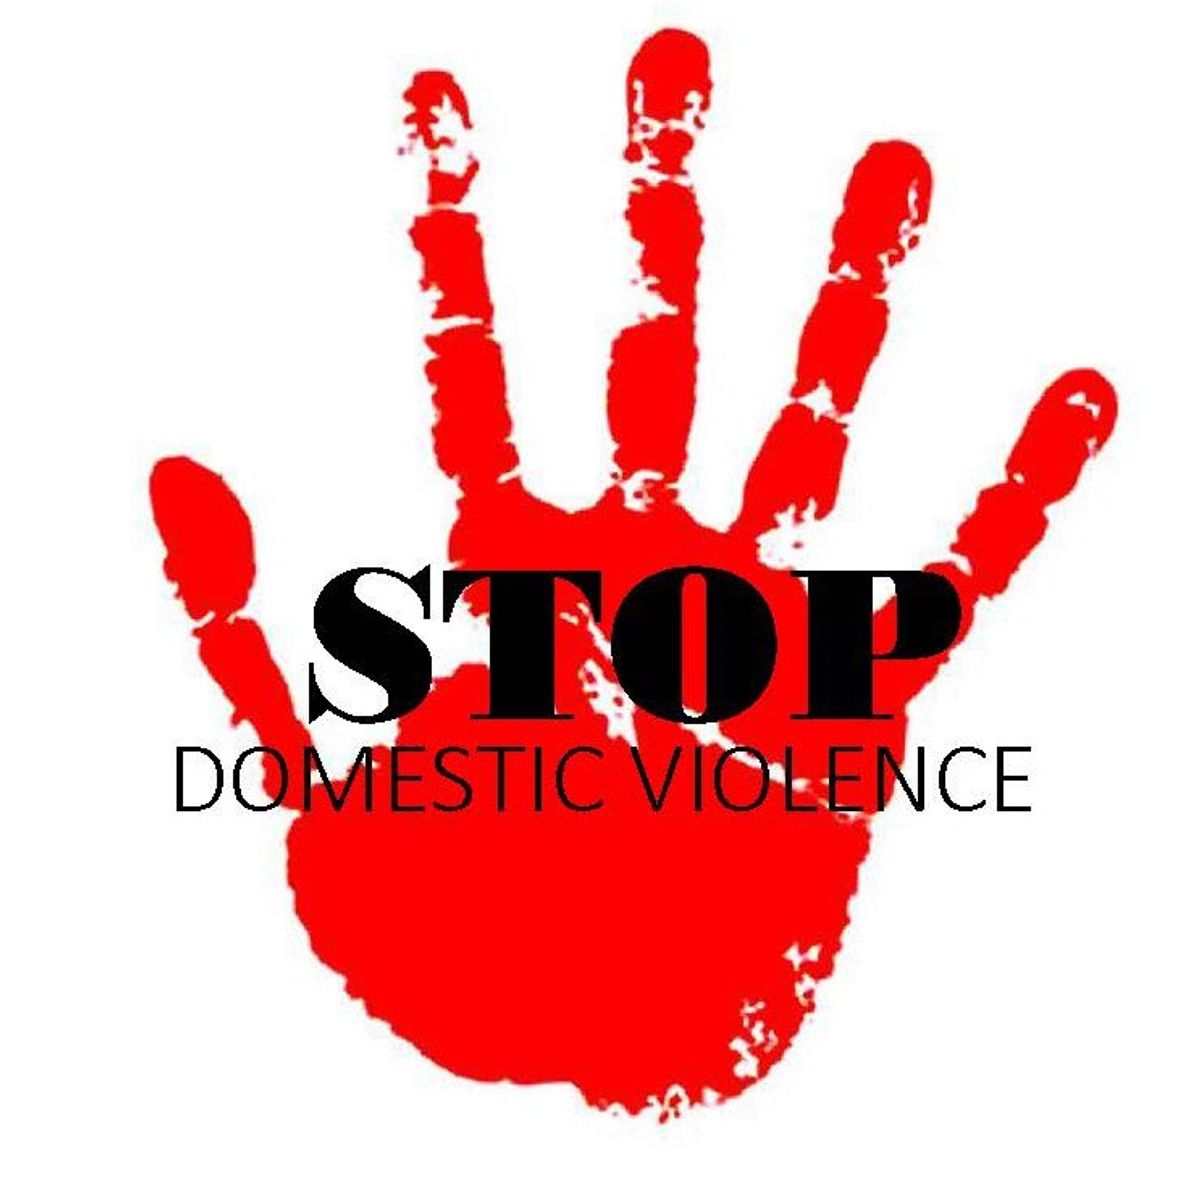 I Was A Victim of Domestic Violence